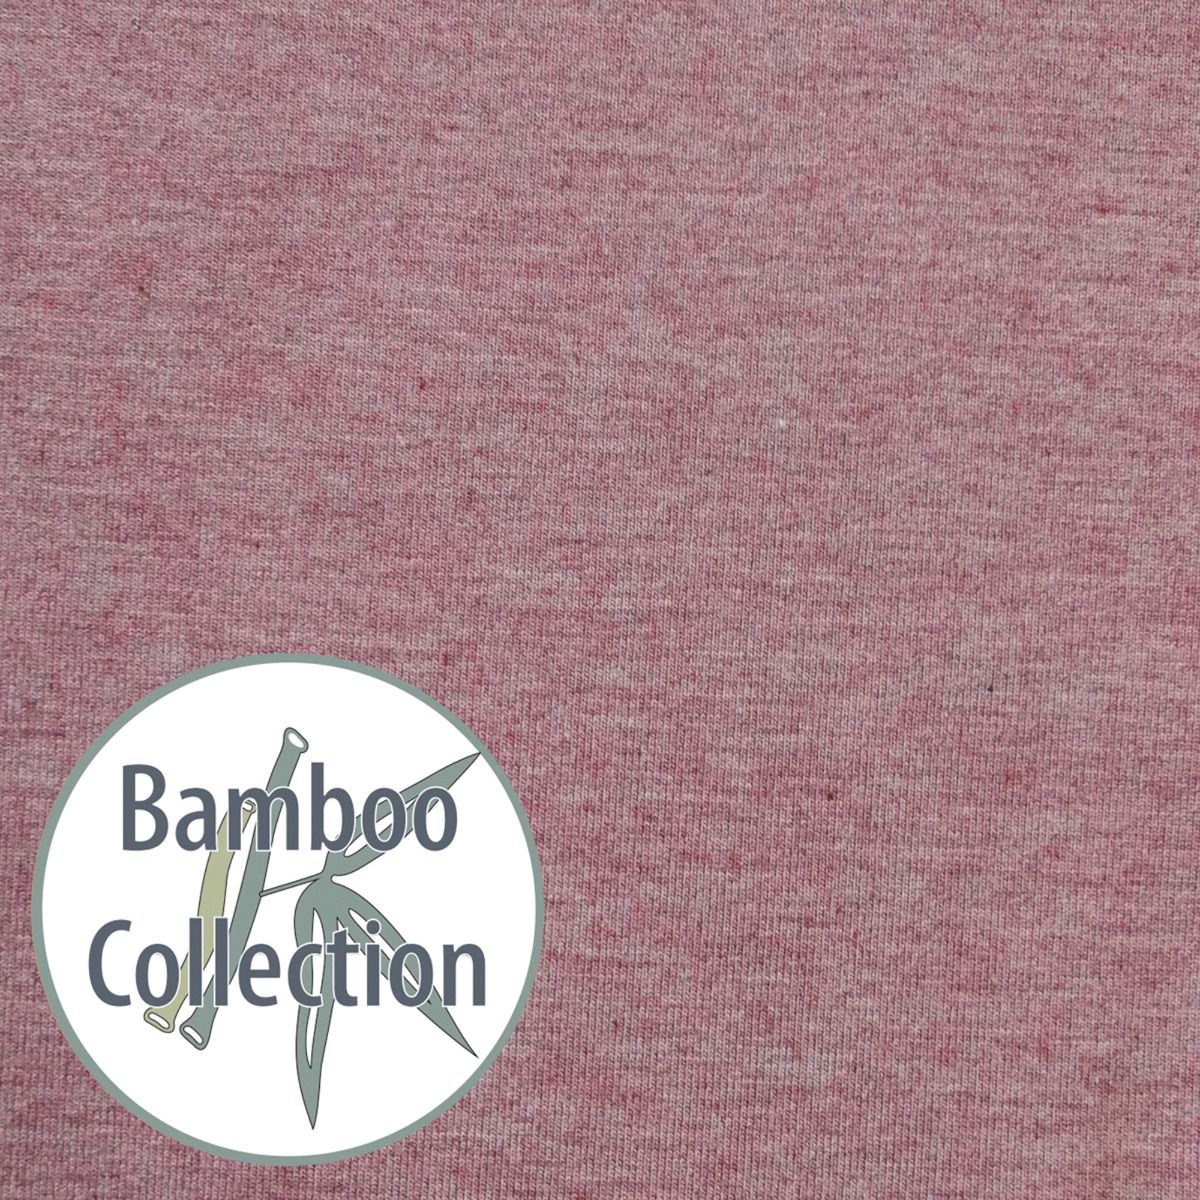 Das Kinderkopfkissen Theraline Bamboo Collection